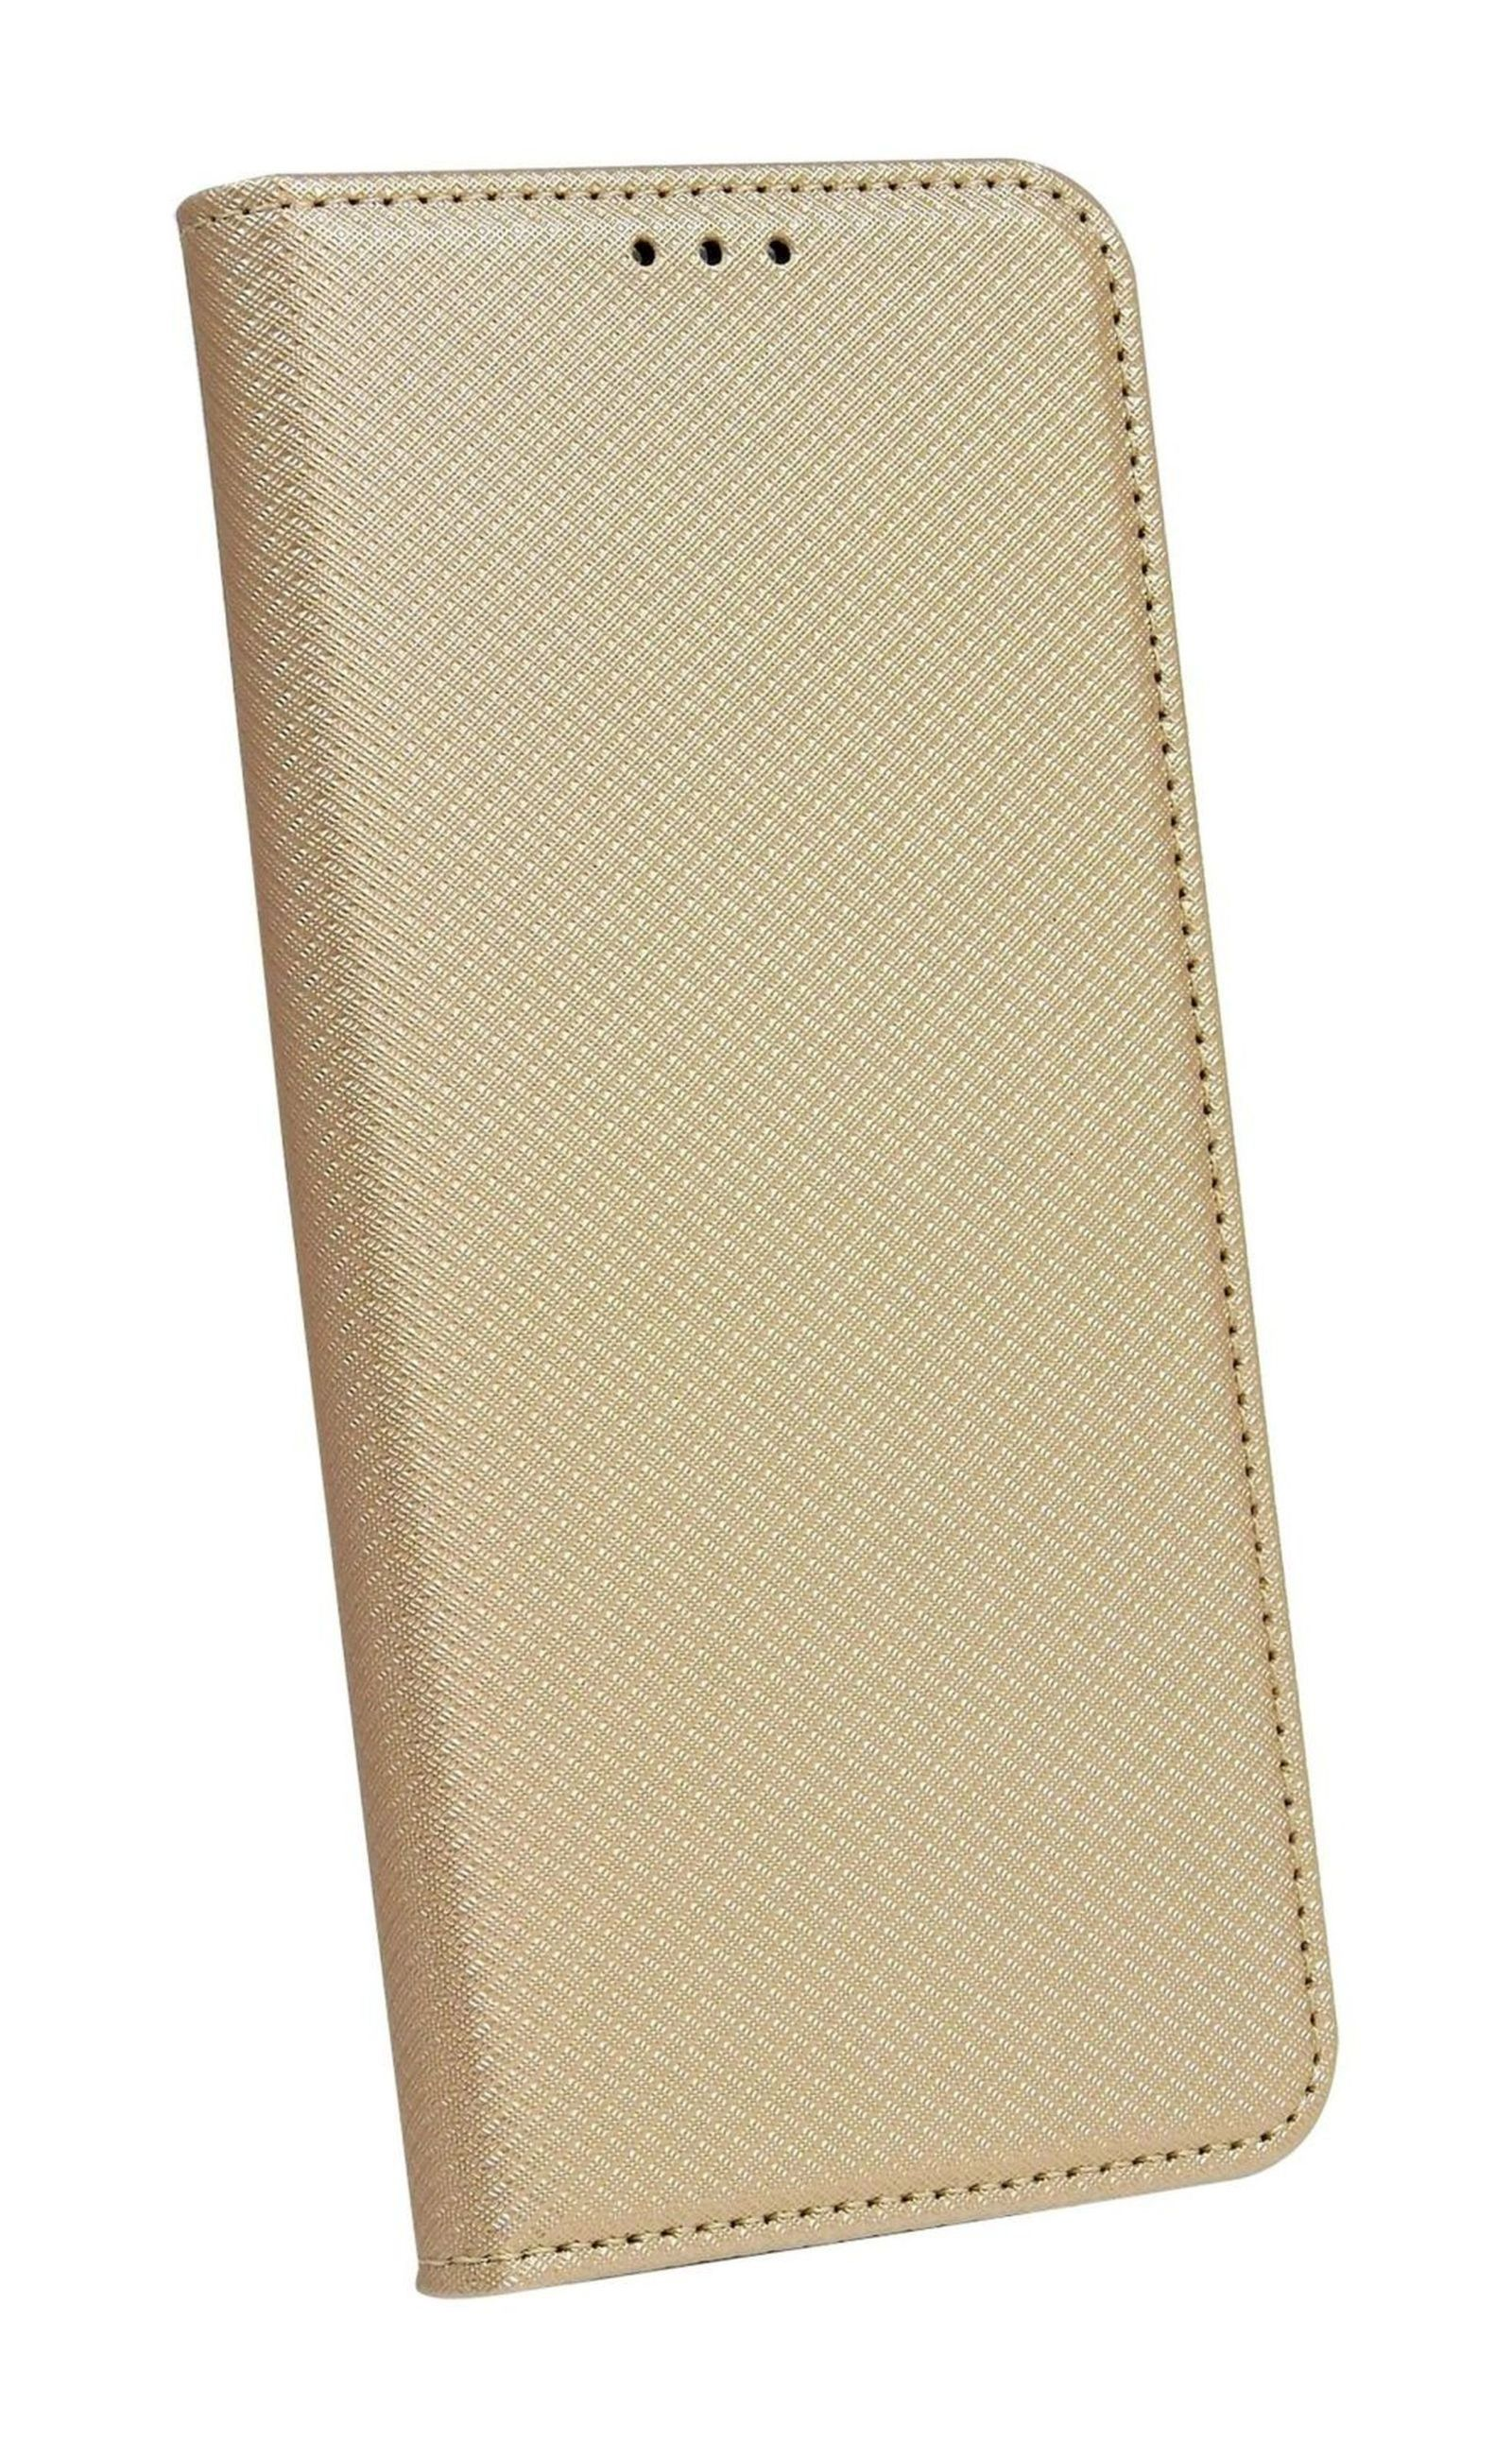 COFI Smart, Bookcover, Nokia, Gold 3.4